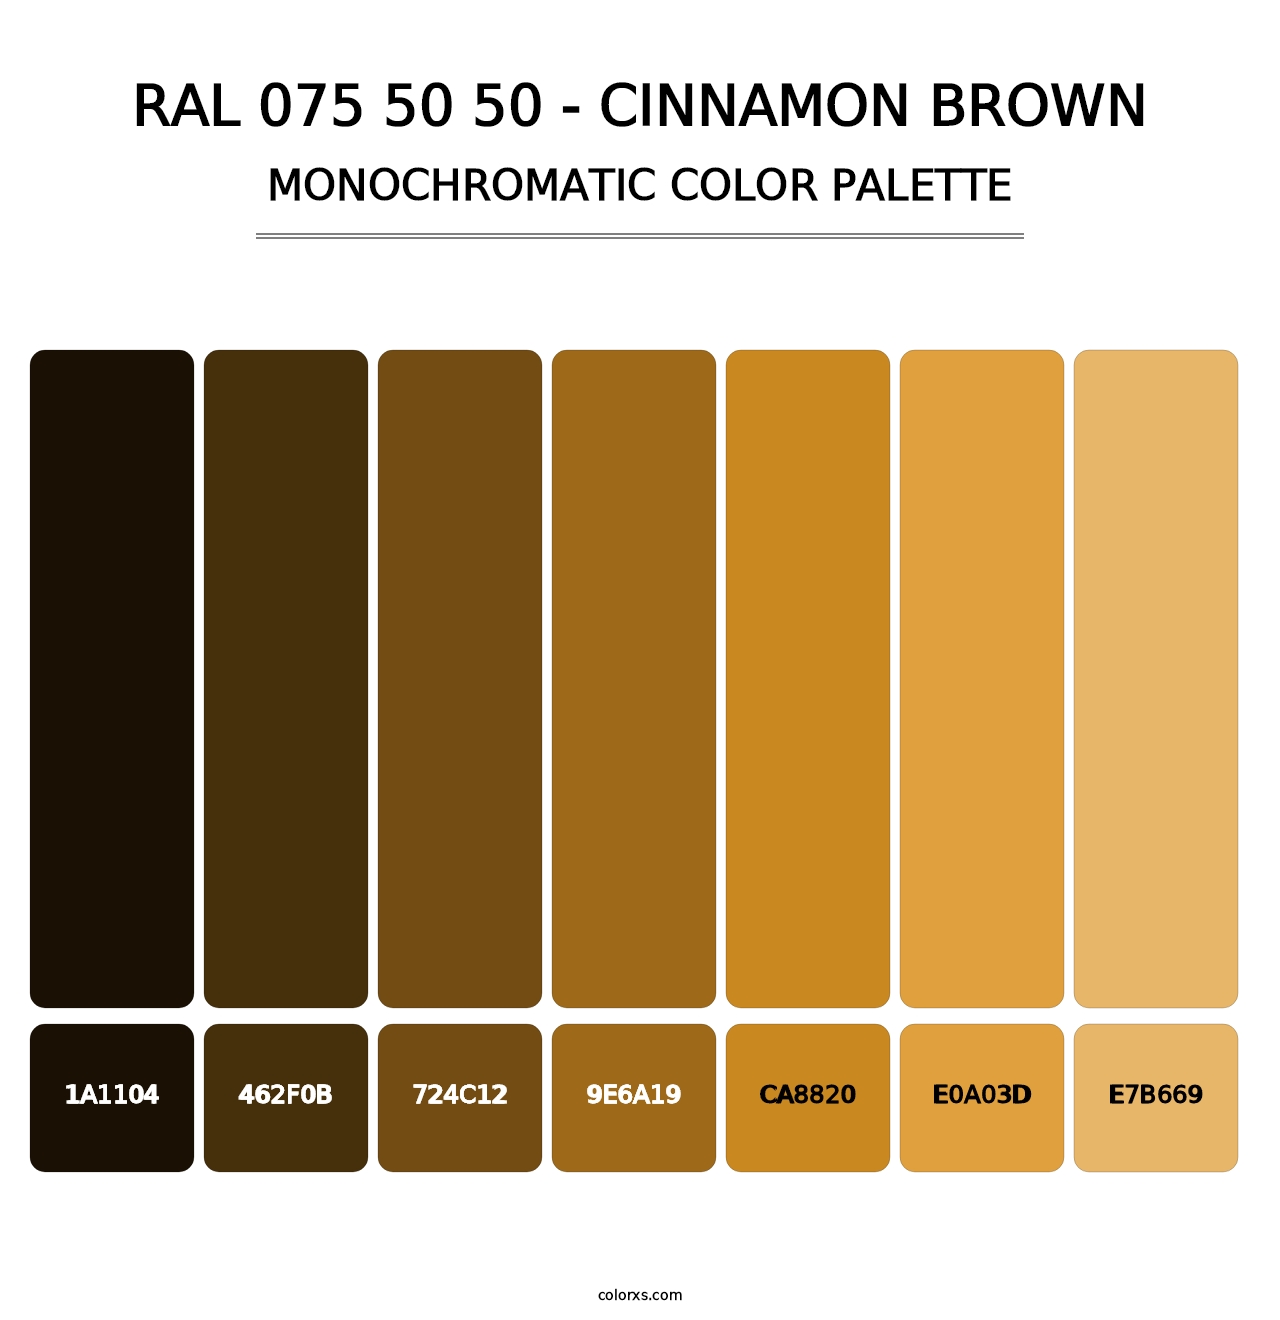 RAL 075 50 50 - Cinnamon Brown - Monochromatic Color Palette